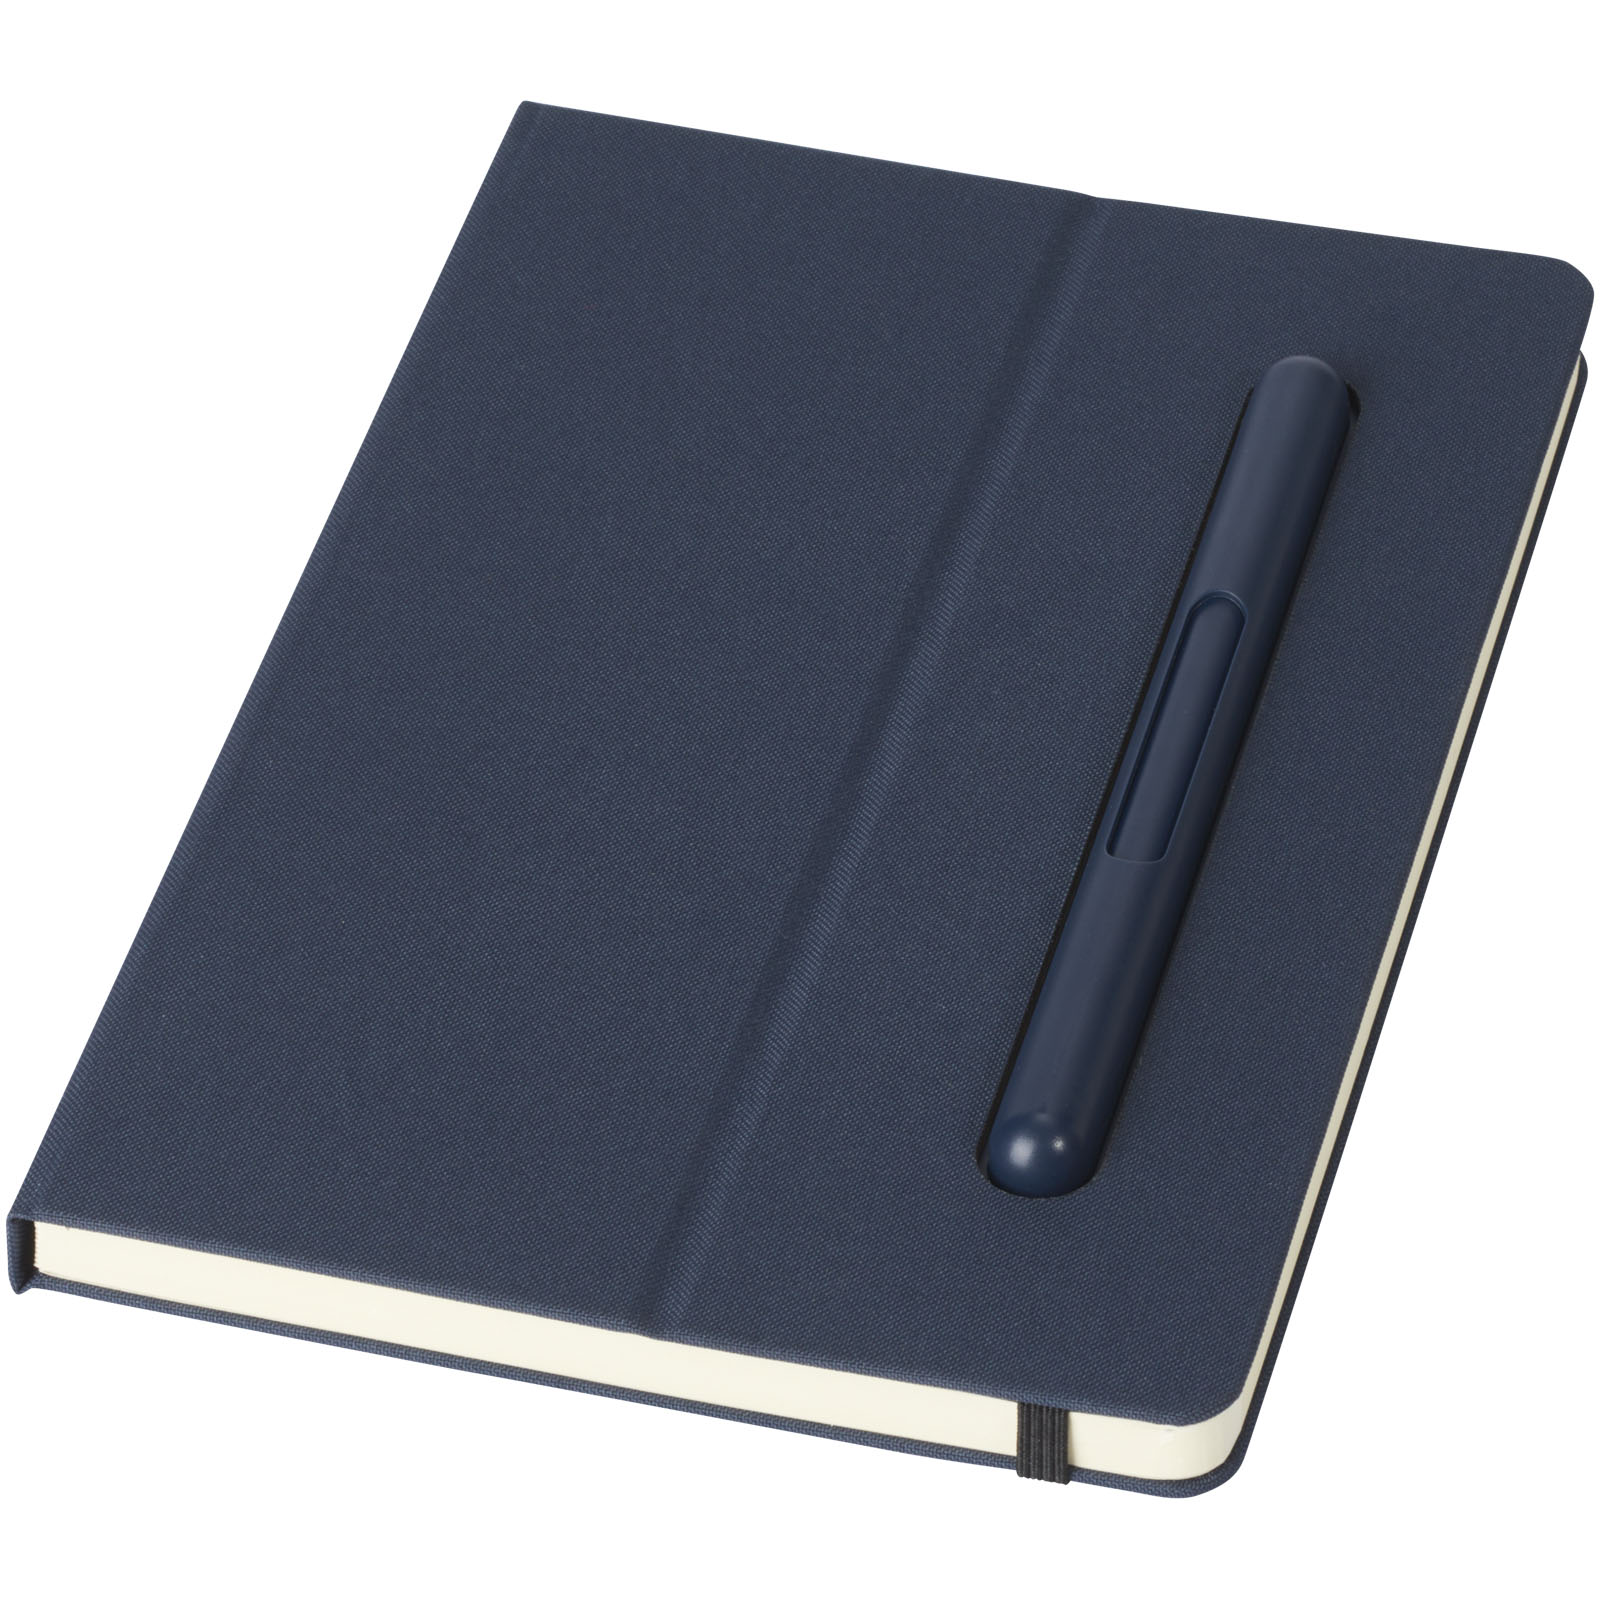 Advertising Hard cover notebooks - Skribo ballpoint pen and notebook set - 0